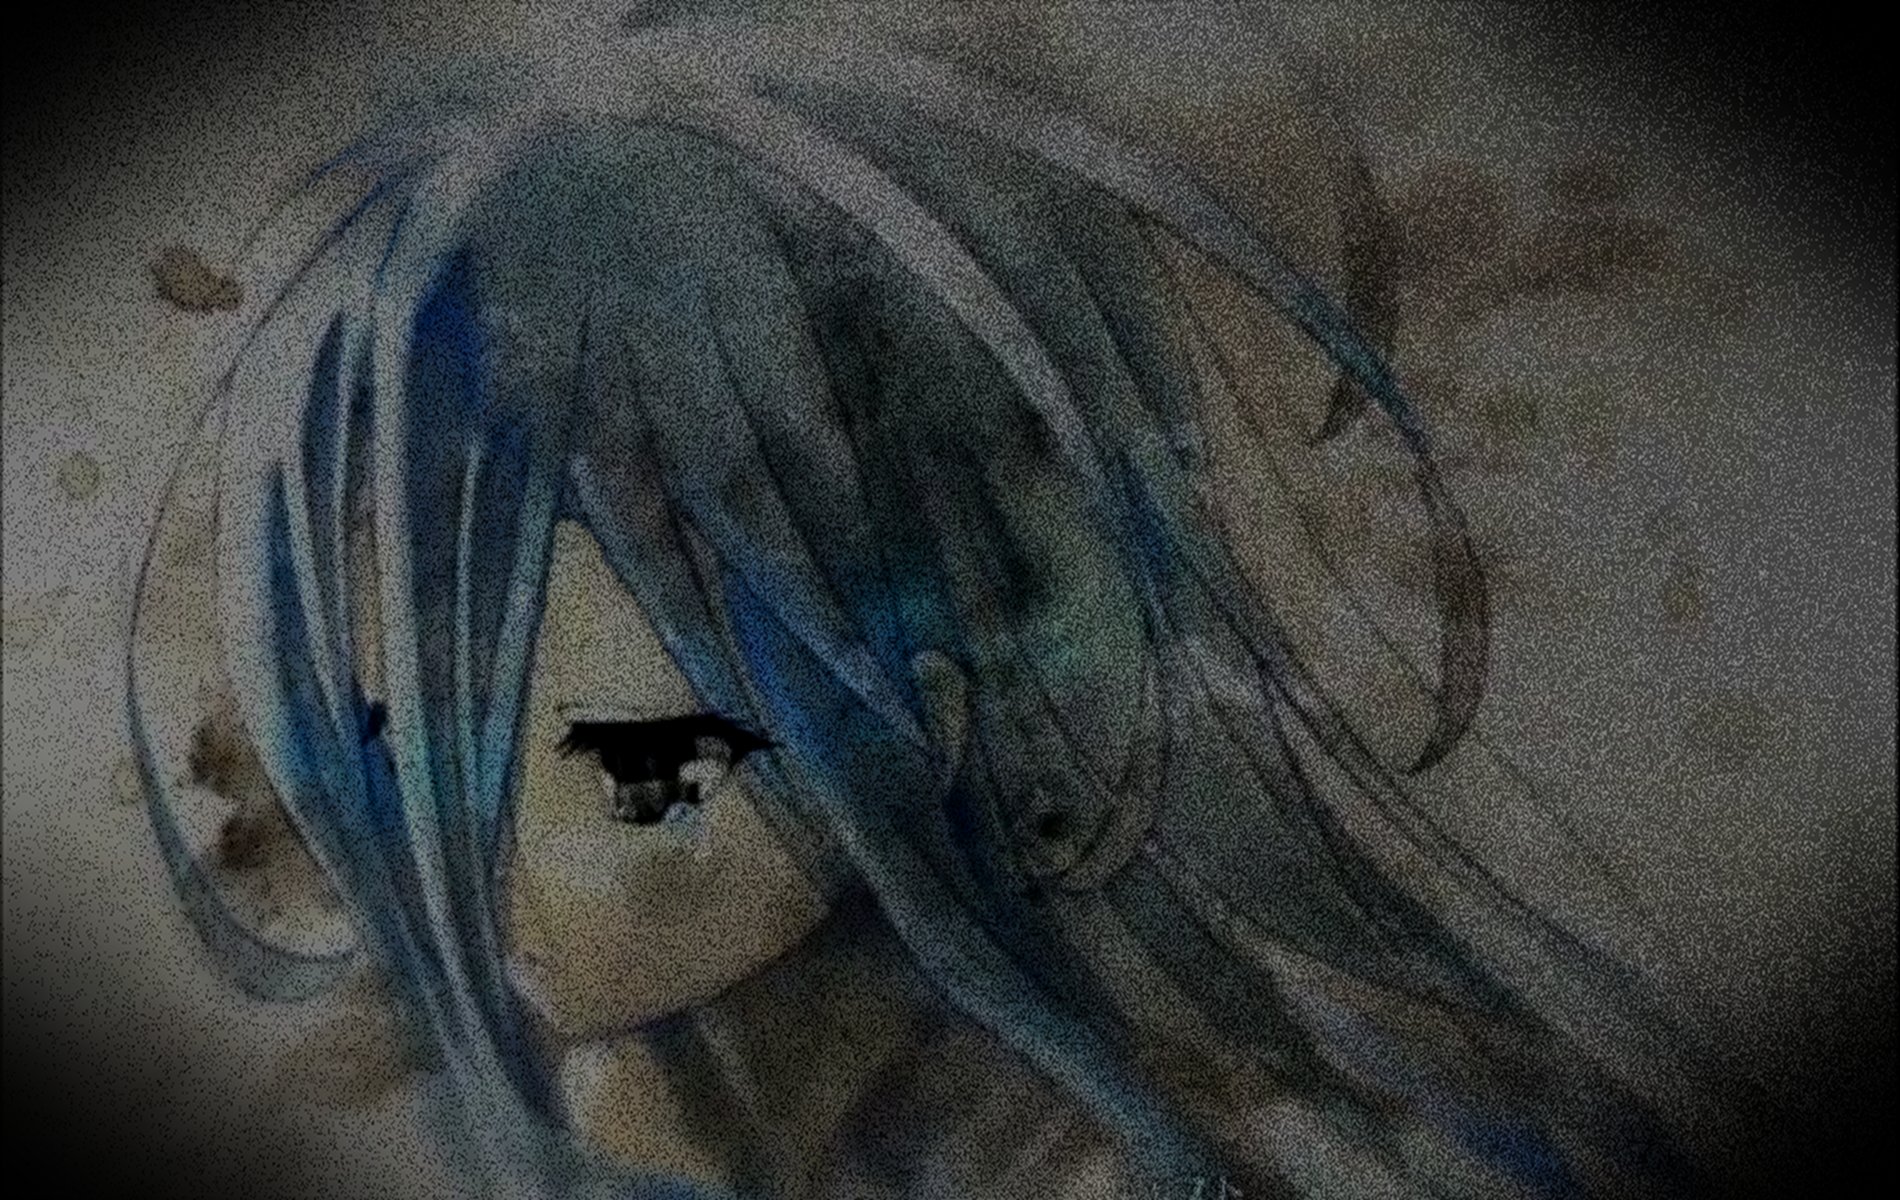 shiro no, Game, No, Life blue, Hair girl Wallpaper